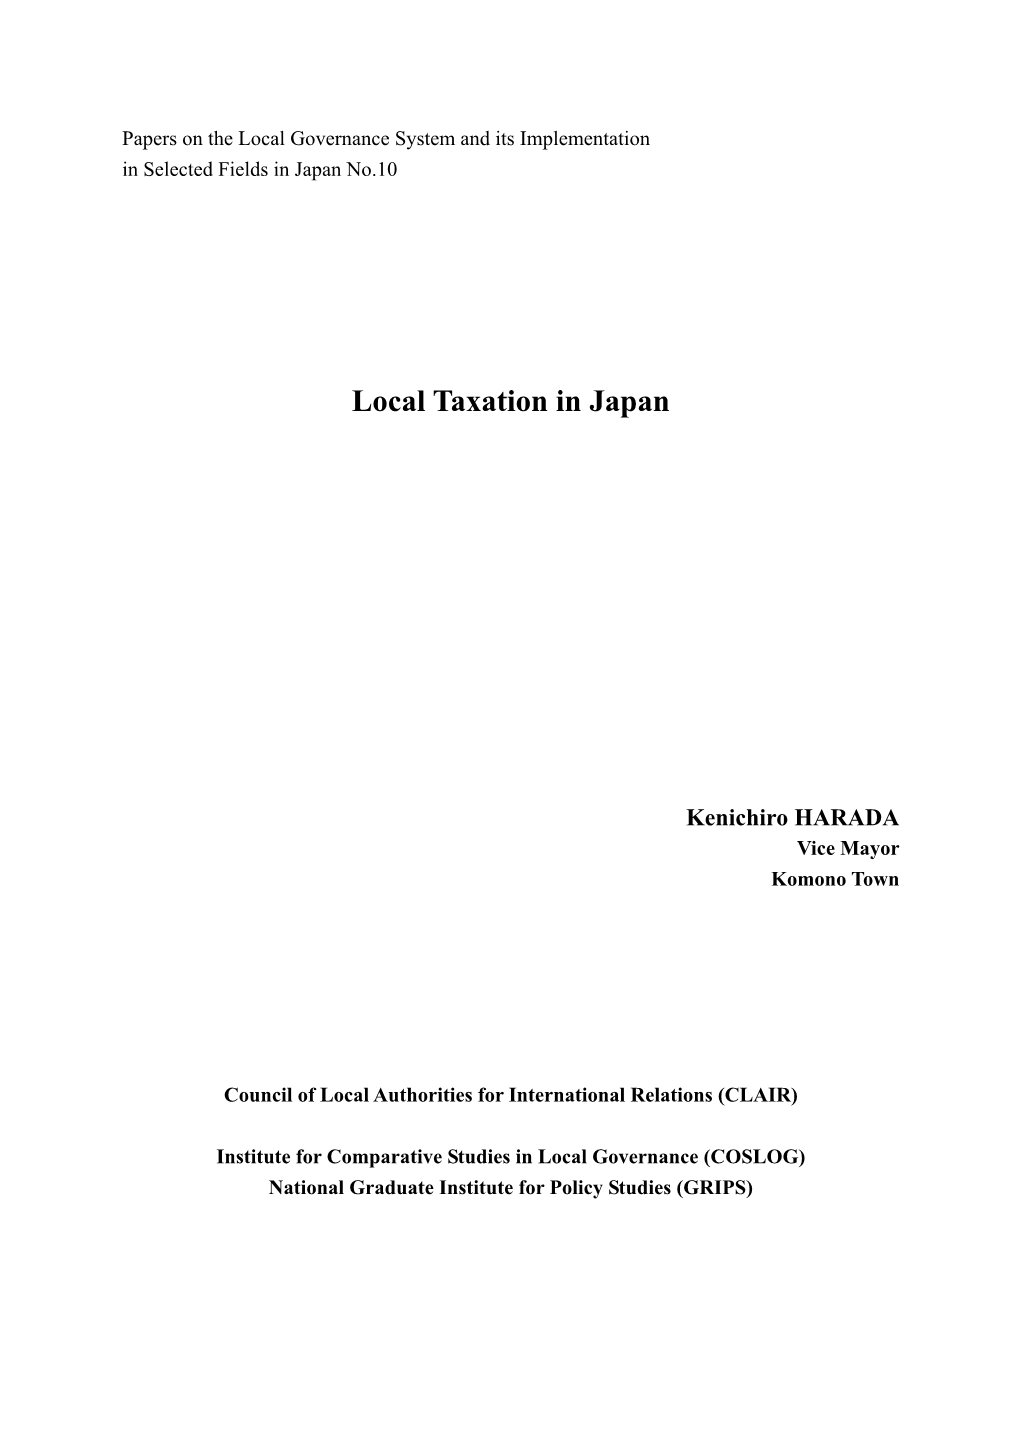 Local Taxation in Japan